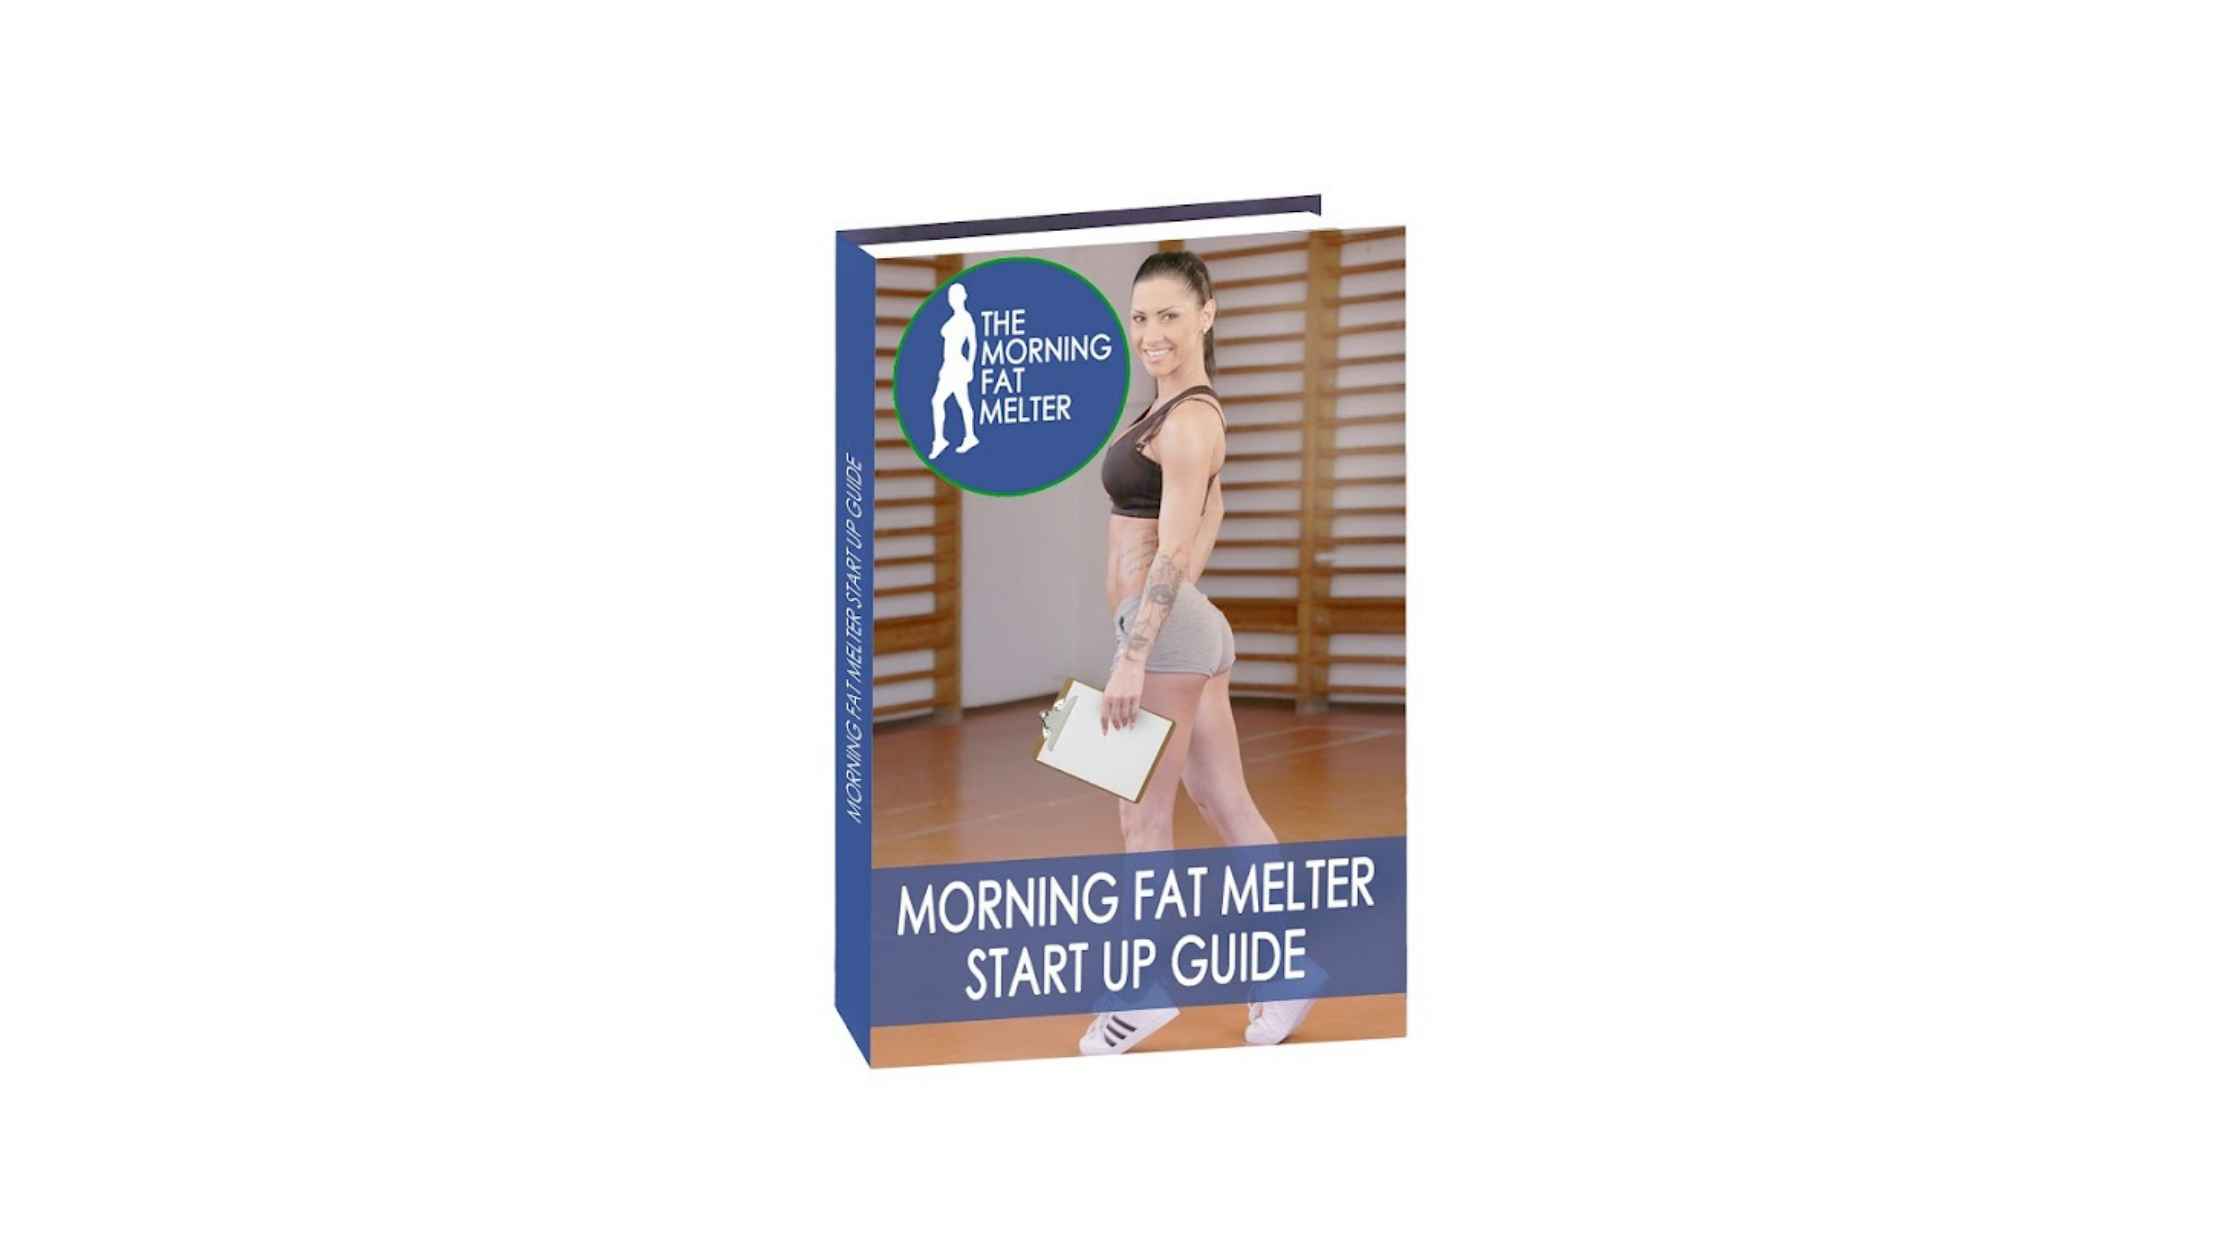 Morning Fat Melter Startup Guide